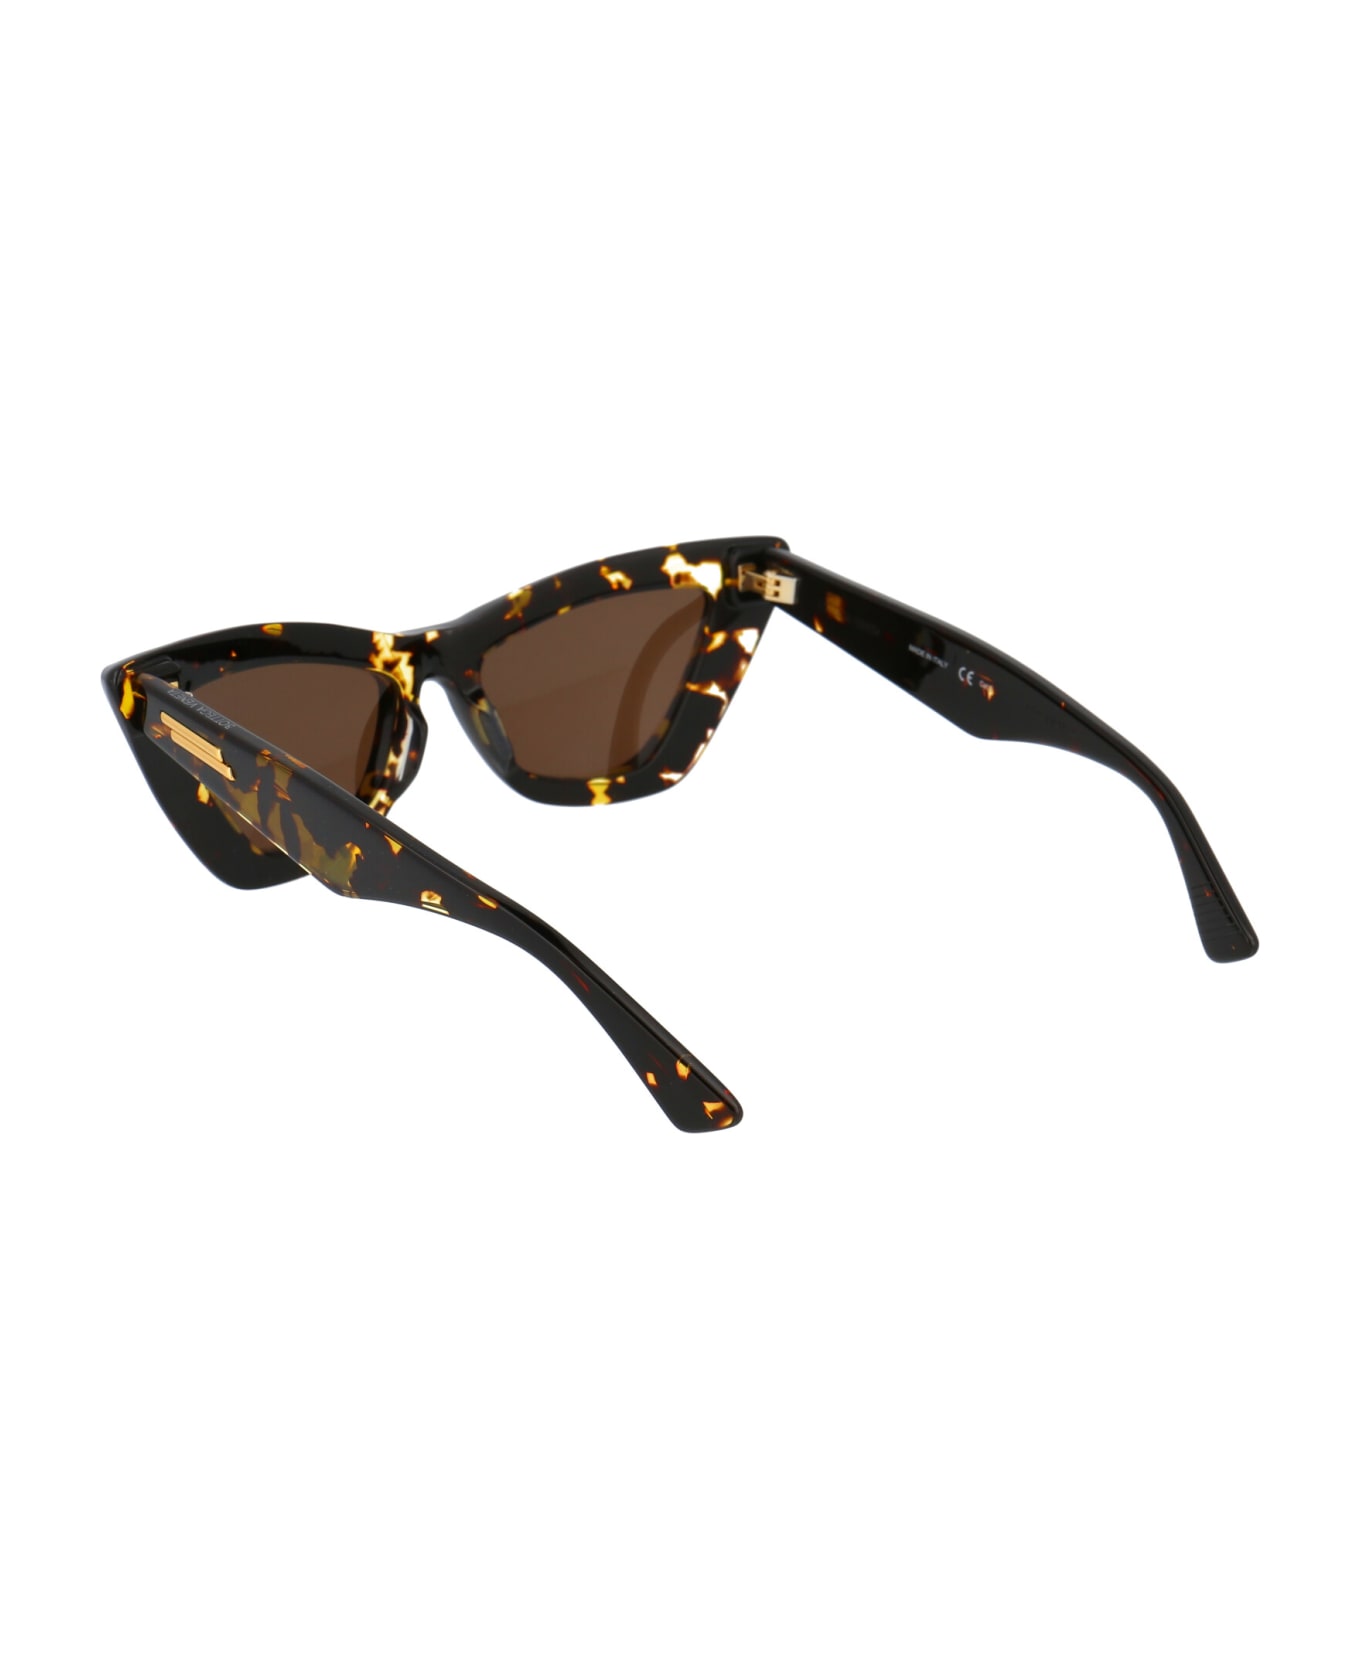 Bottega Veneta Eyewear Bv1101s Sunglasses - 002 HAVANA HAVANA BROWN